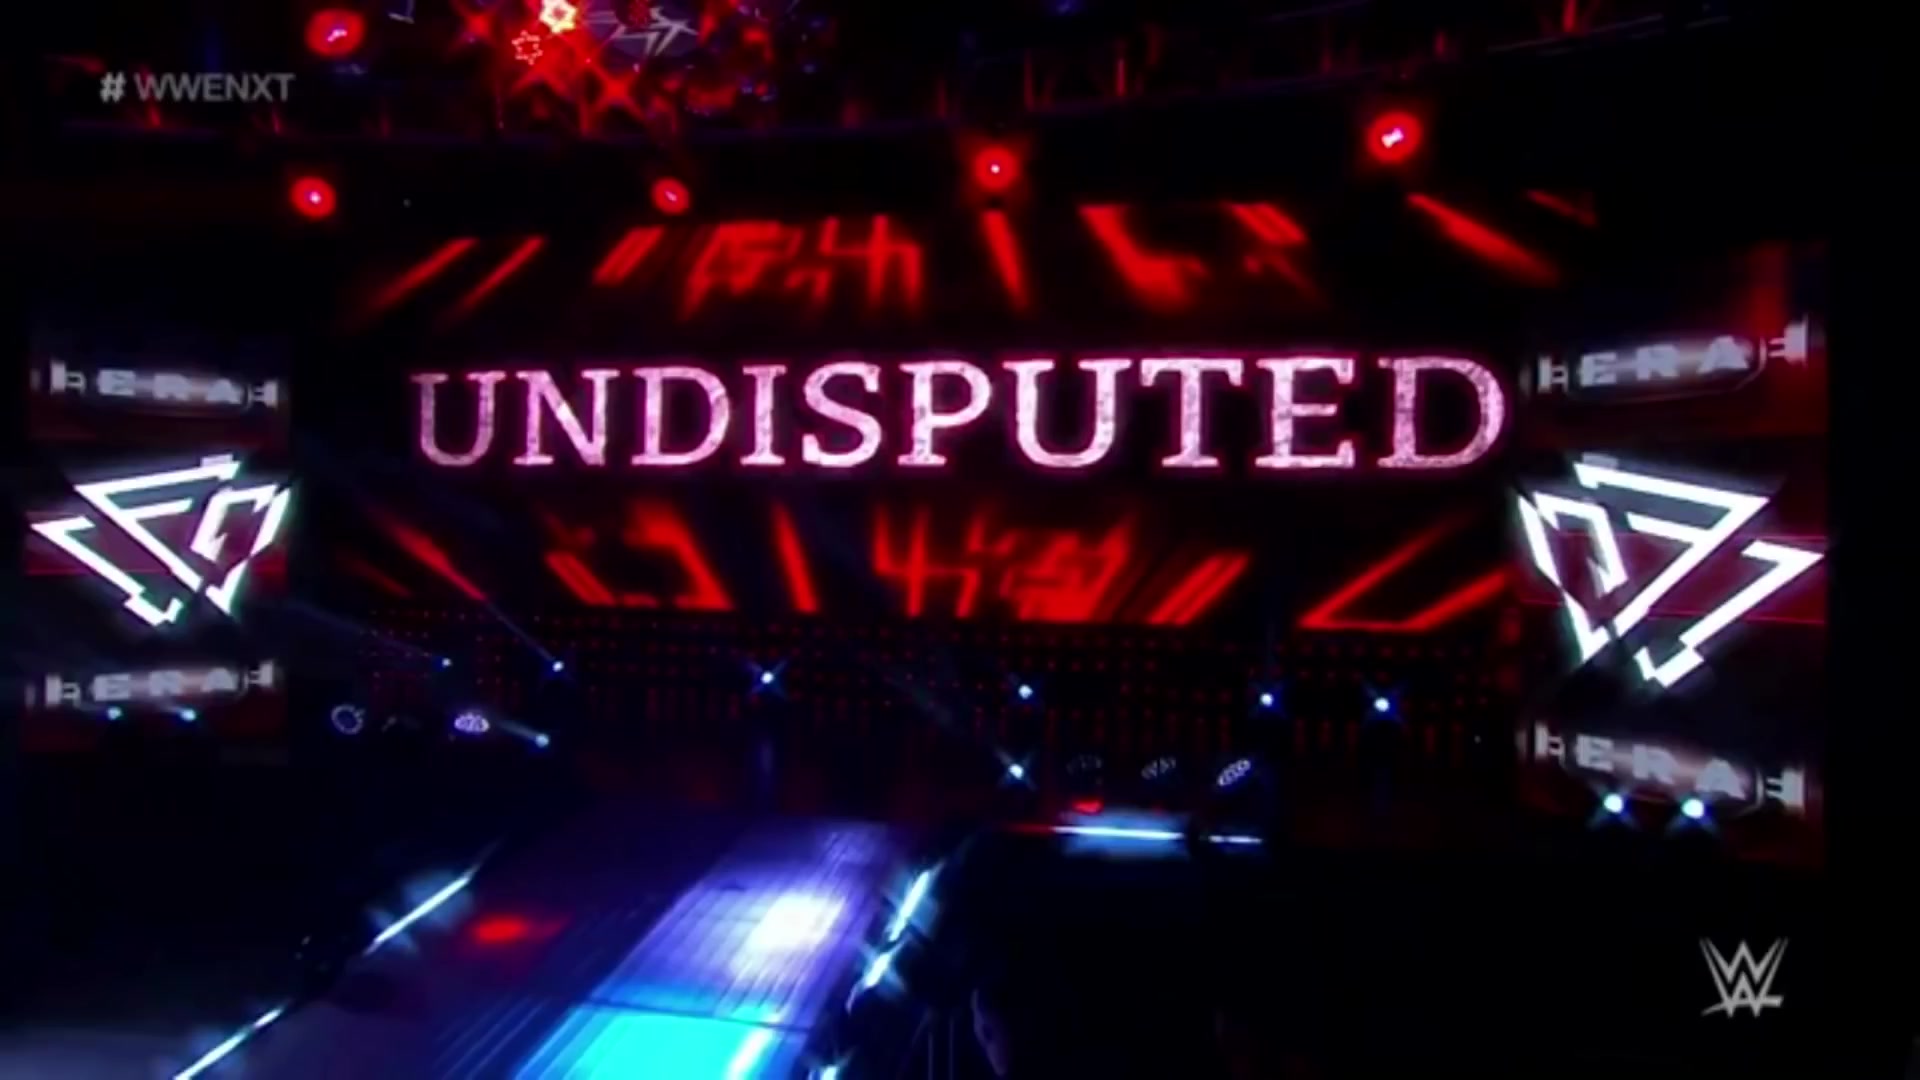 《Undisputed》将于本月晚些时候在Steam抢先体验，推出超过50个可玩角色 预告片